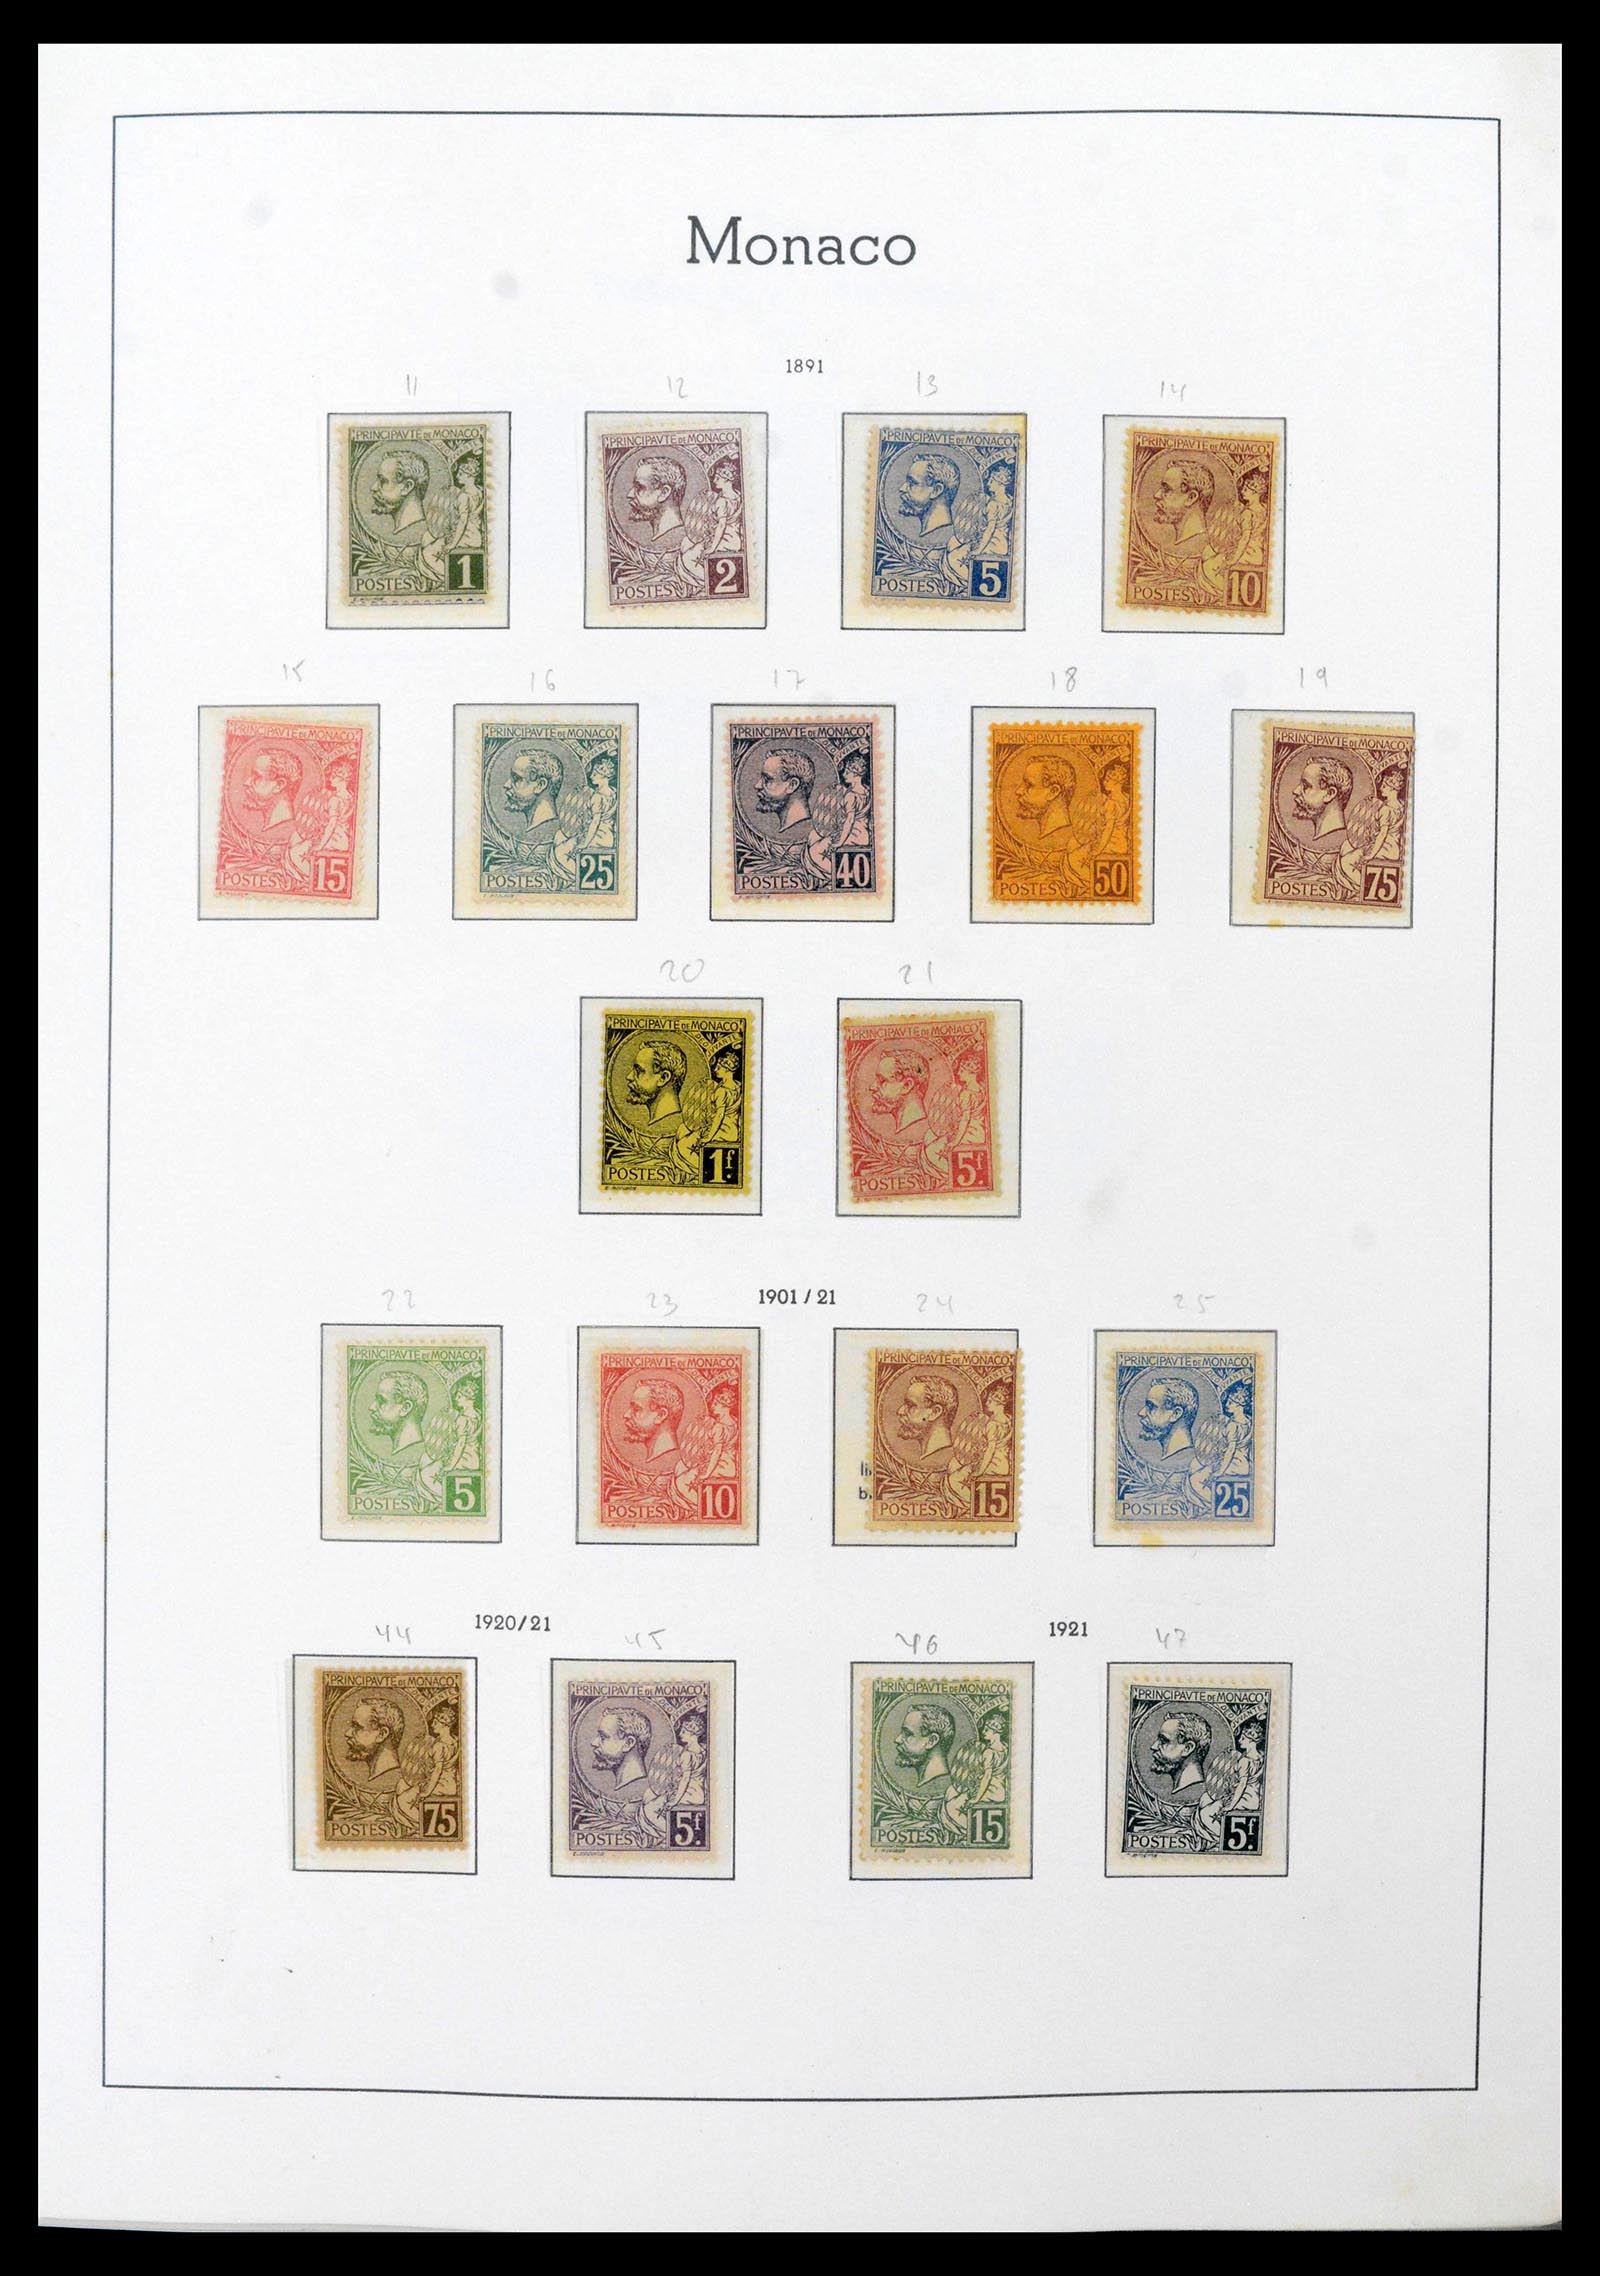 39250 0002 - Stamp collection 39250 Monaco 1885-1995.